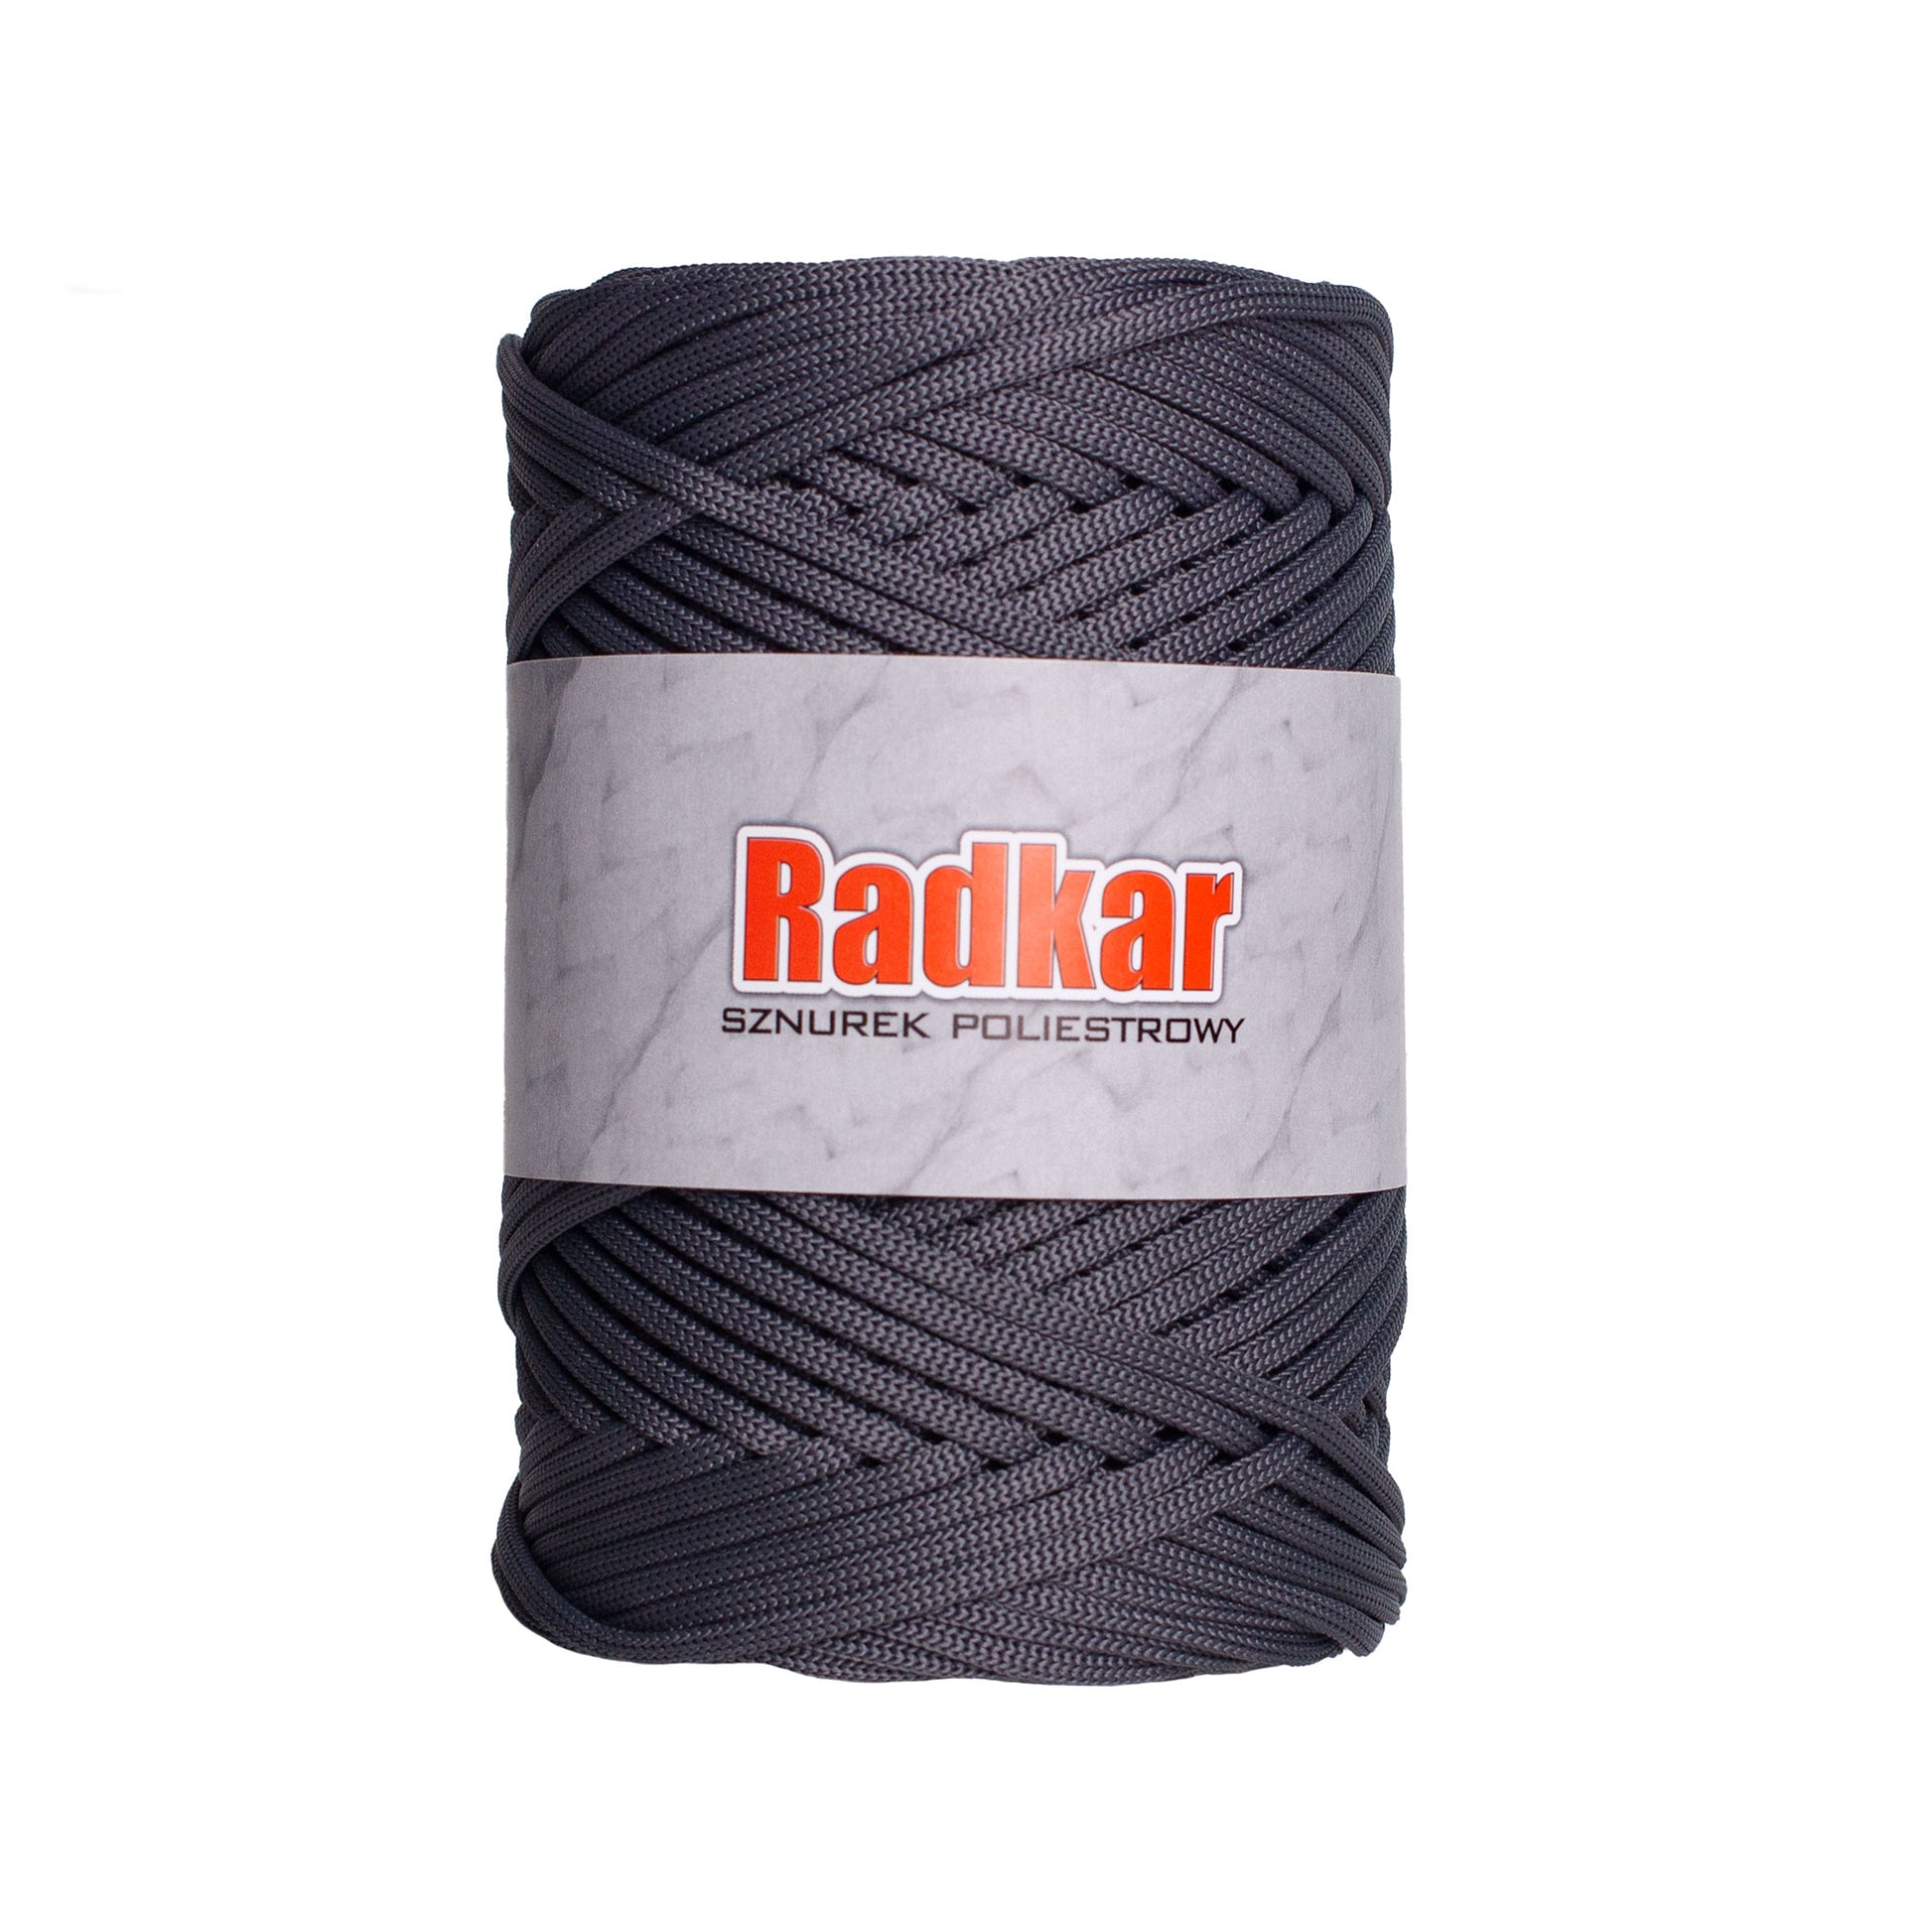 braided 3mm polyester cord radkar lightweight handmade bag craft macrame